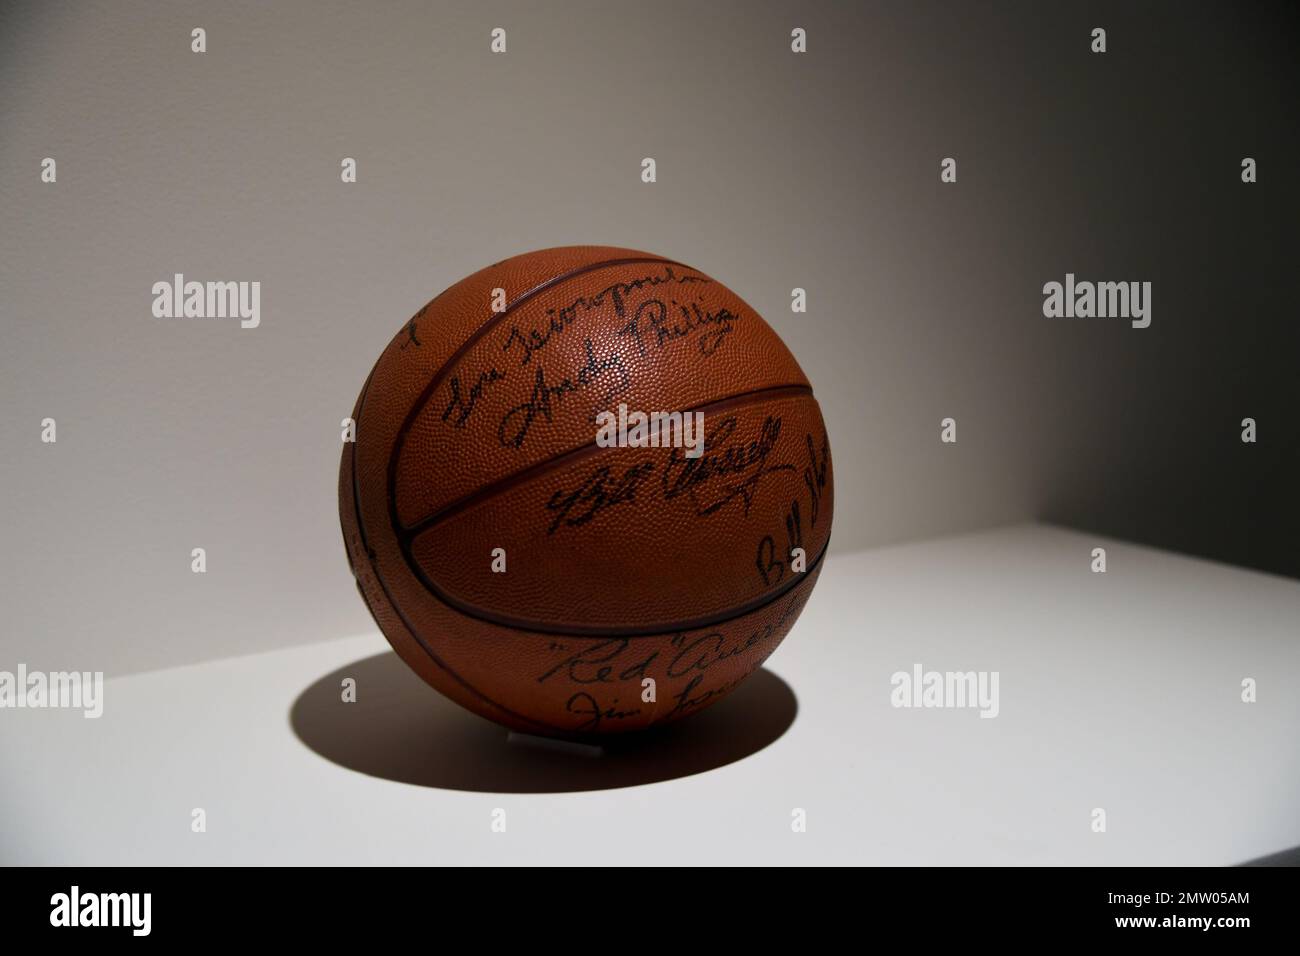 Al Horford Boston Celtics Autographed Black Jersey - Dynasty